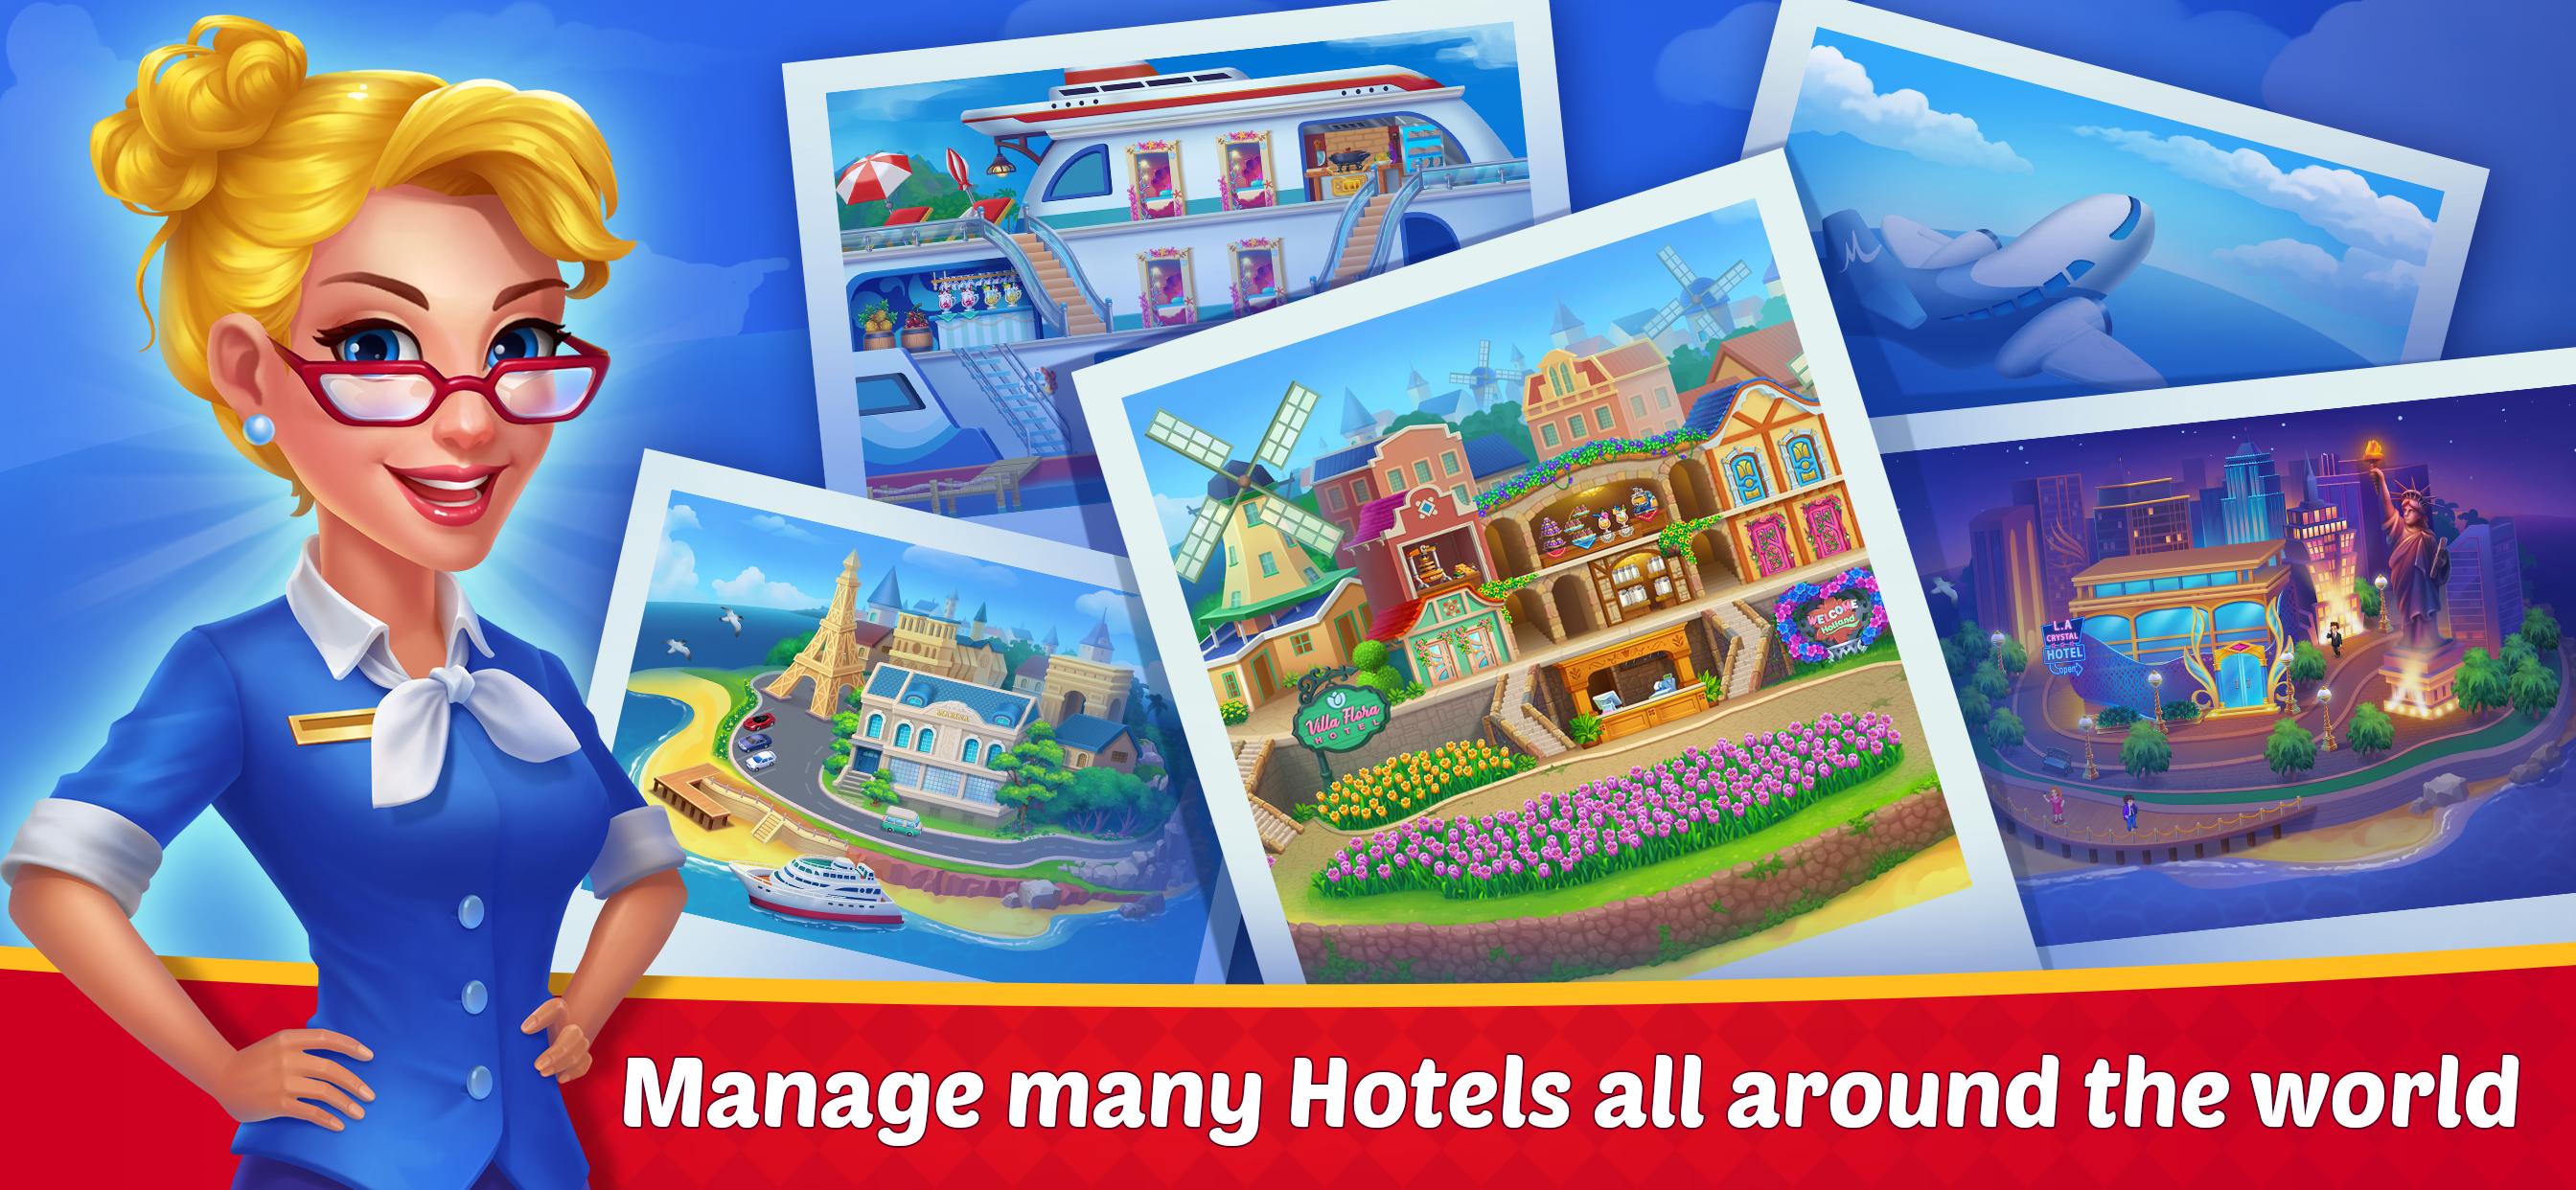 Dream Hotel Hotel Manager Simulation games 1.2.4 Screenshot 3